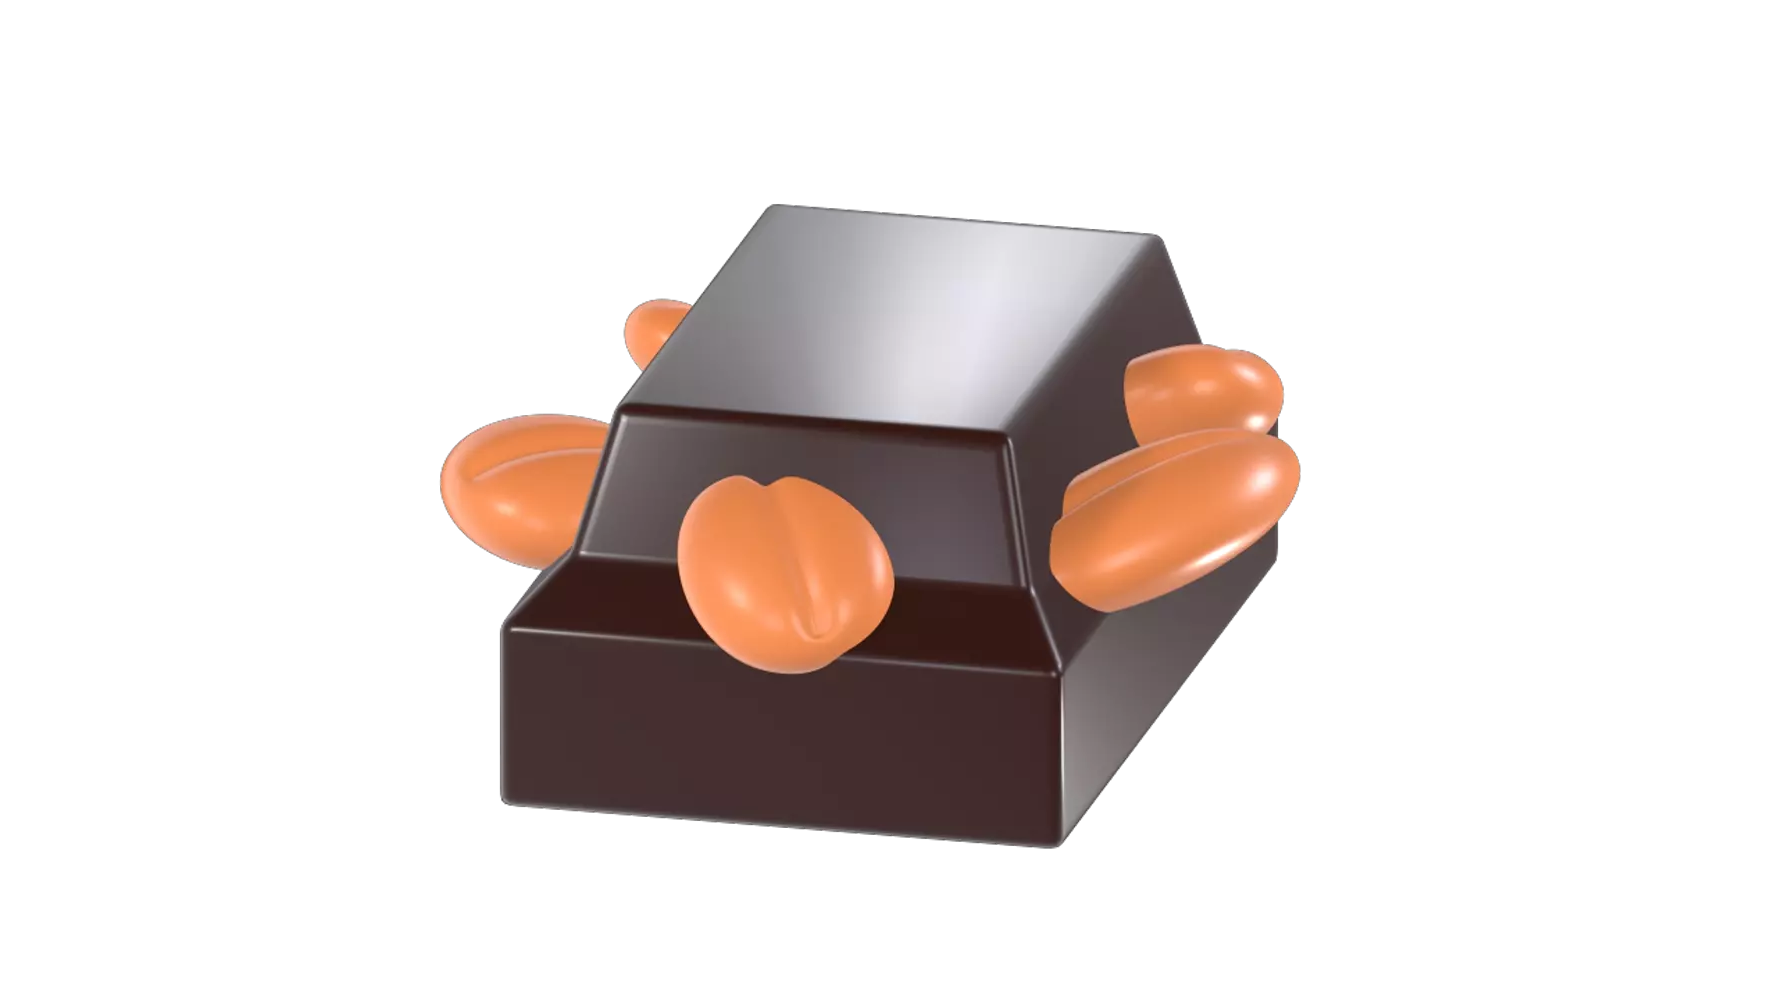 Chocolate & Peanuts 3D Graphic